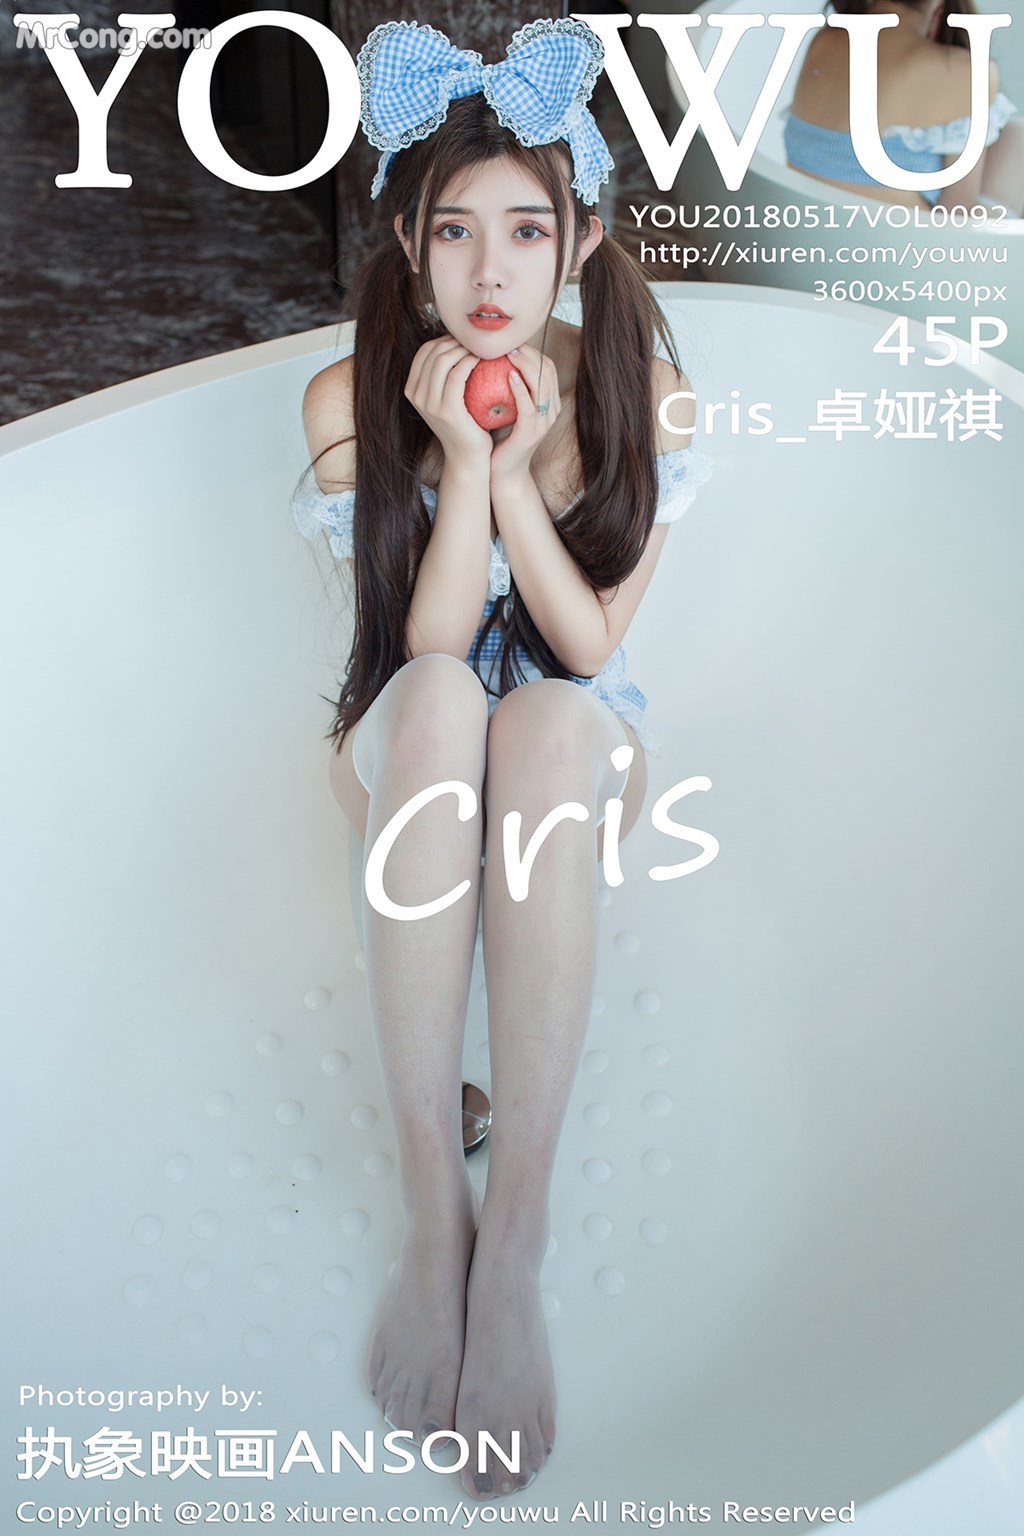 YouWu Vol.092: Model Cris_ 卓娅祺 (46 photos)